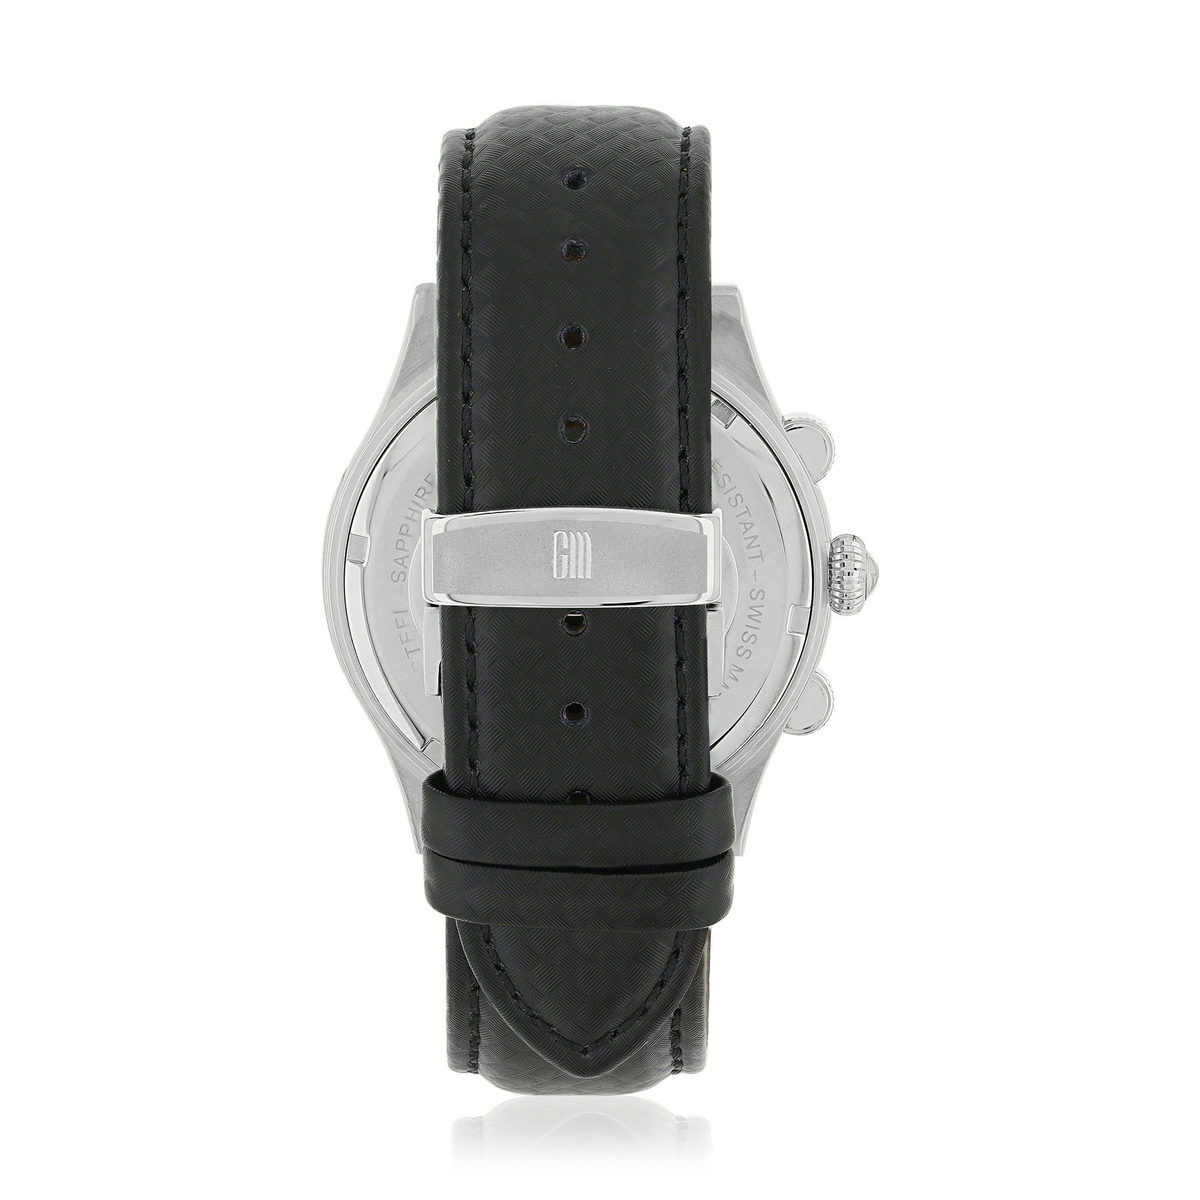 Montre MATY GM chronographe cadran taupe bracelet cuir noir - vue 3